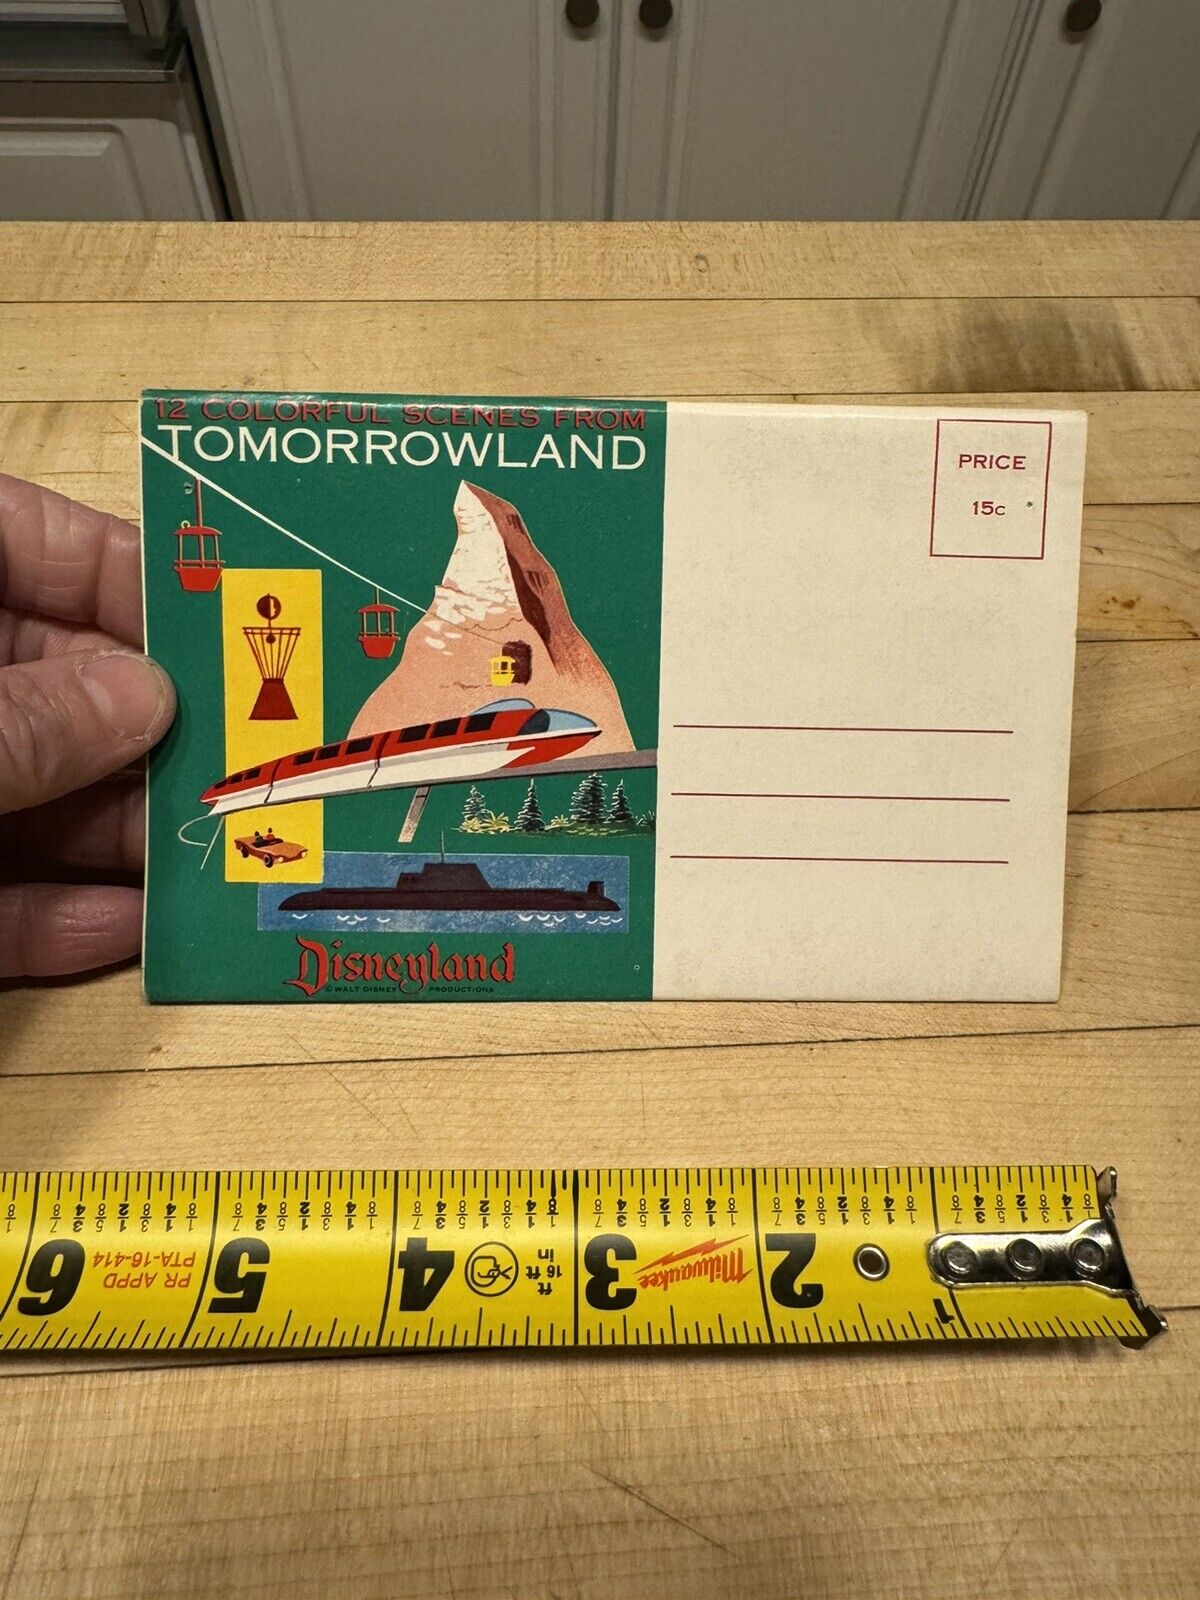 CA Disneyland Colorful Scenes from Tomorrowland Souvenir Postcard Folder c1960s